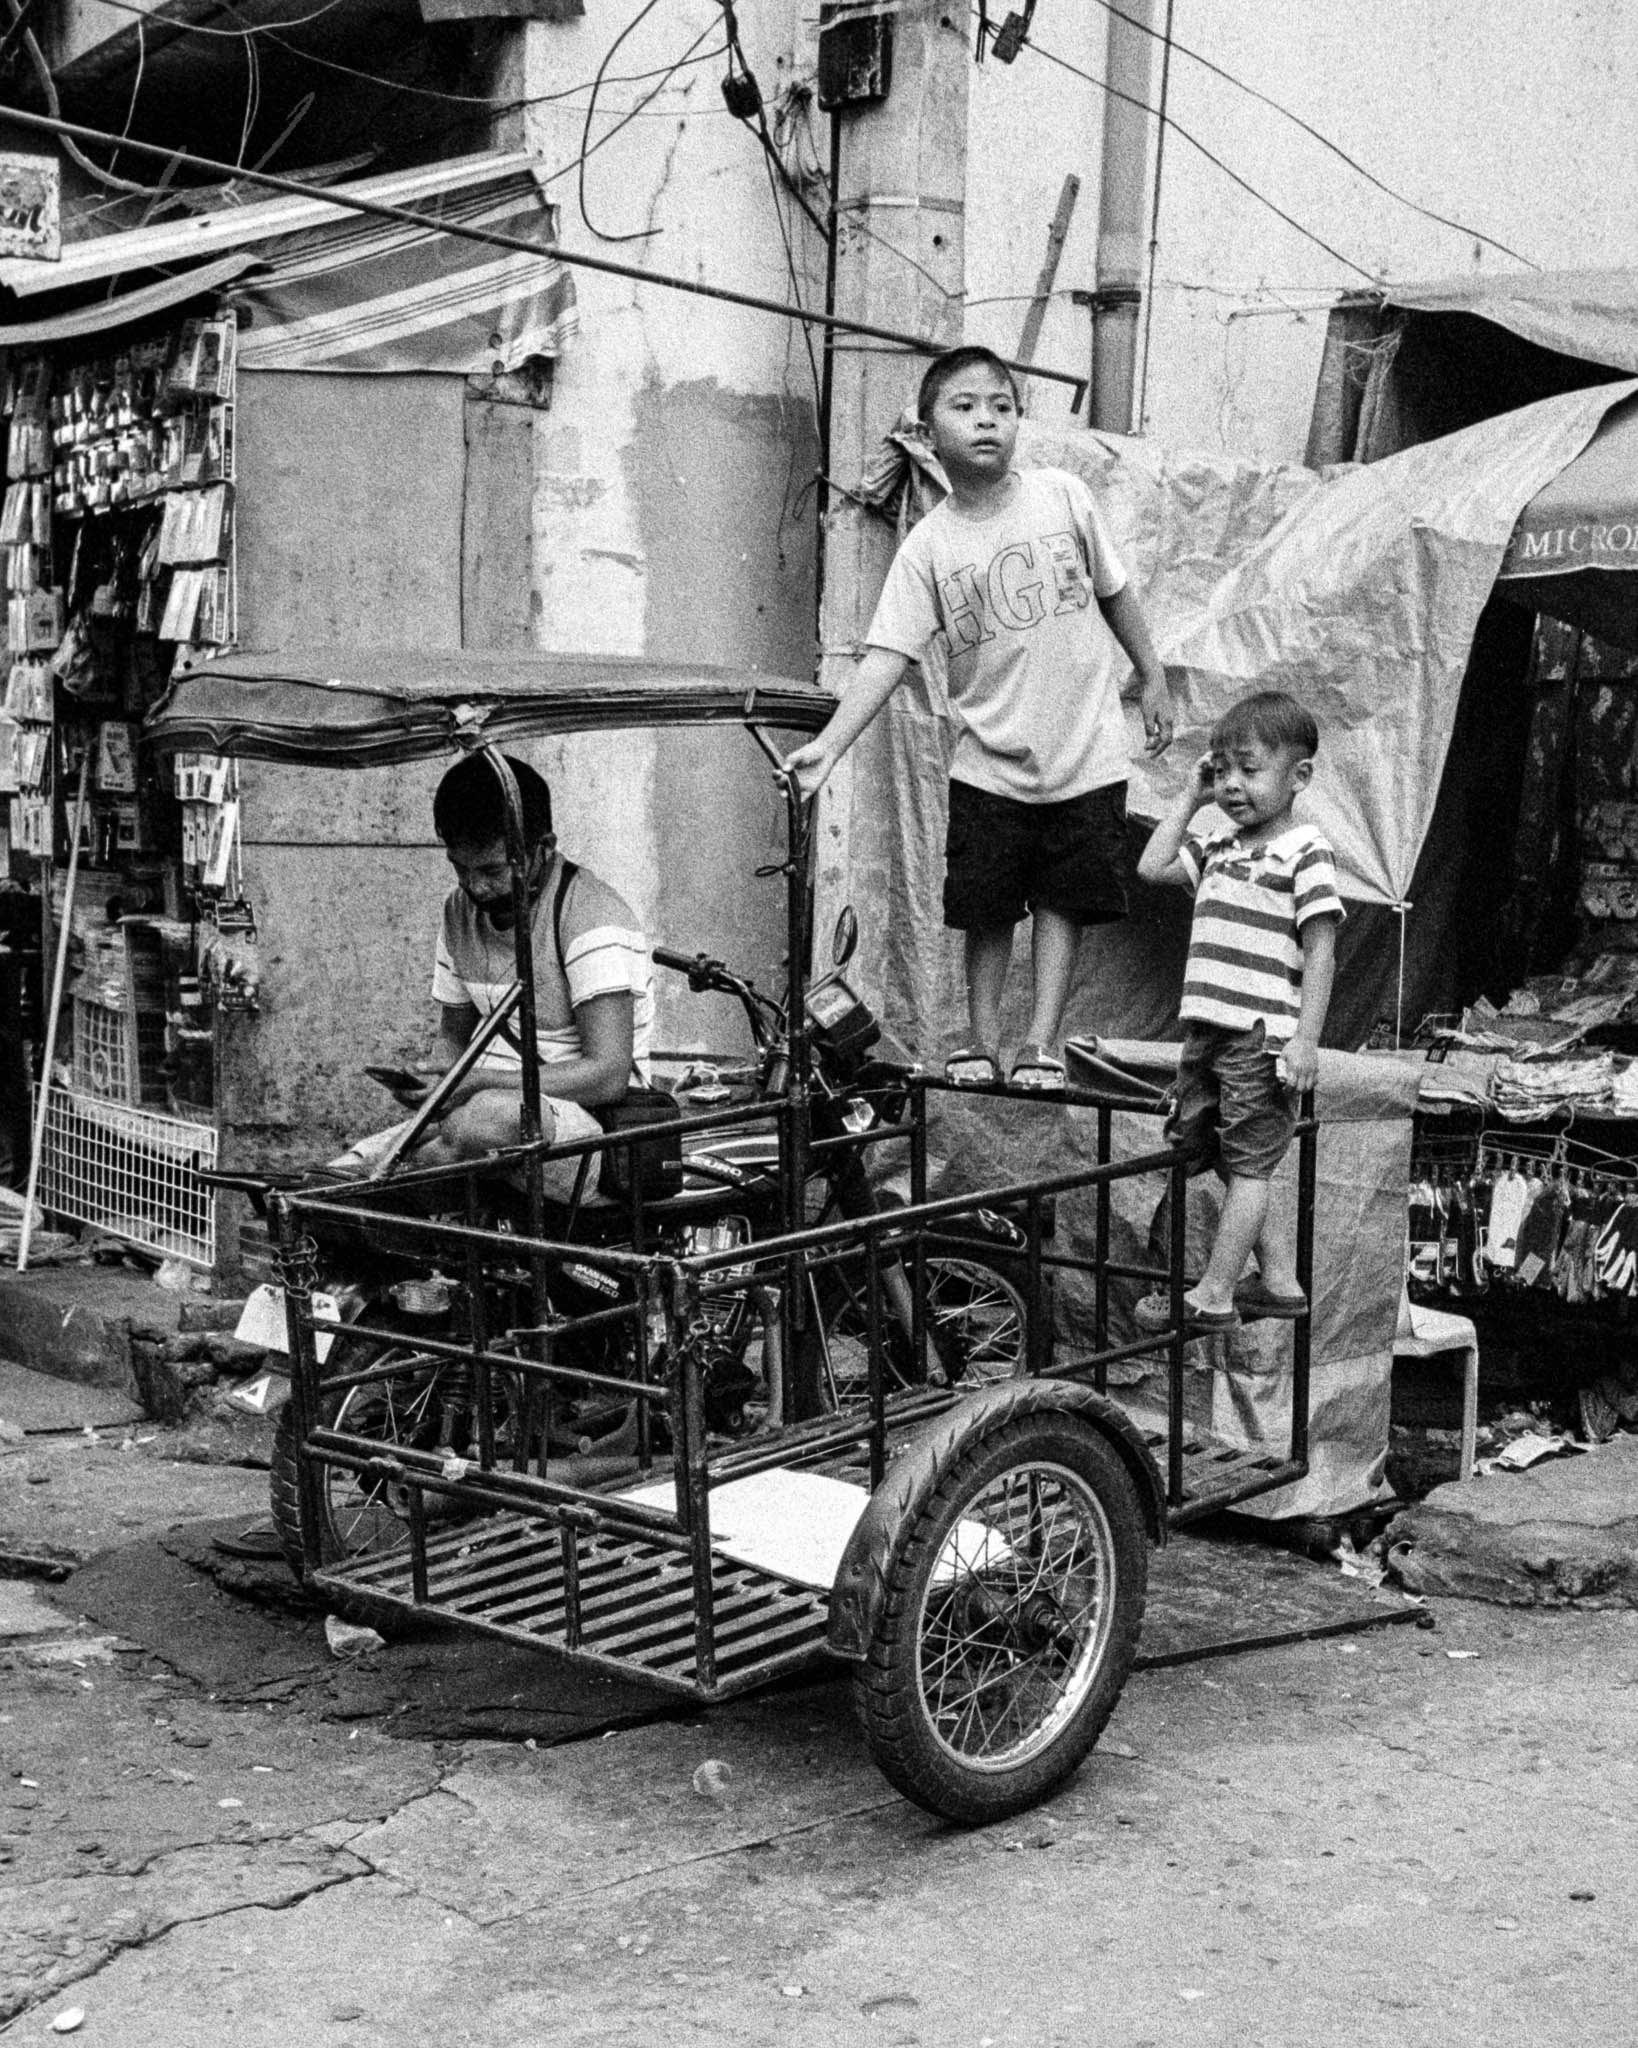 Children interacting with trike in bustling, informal urban neighborhood.